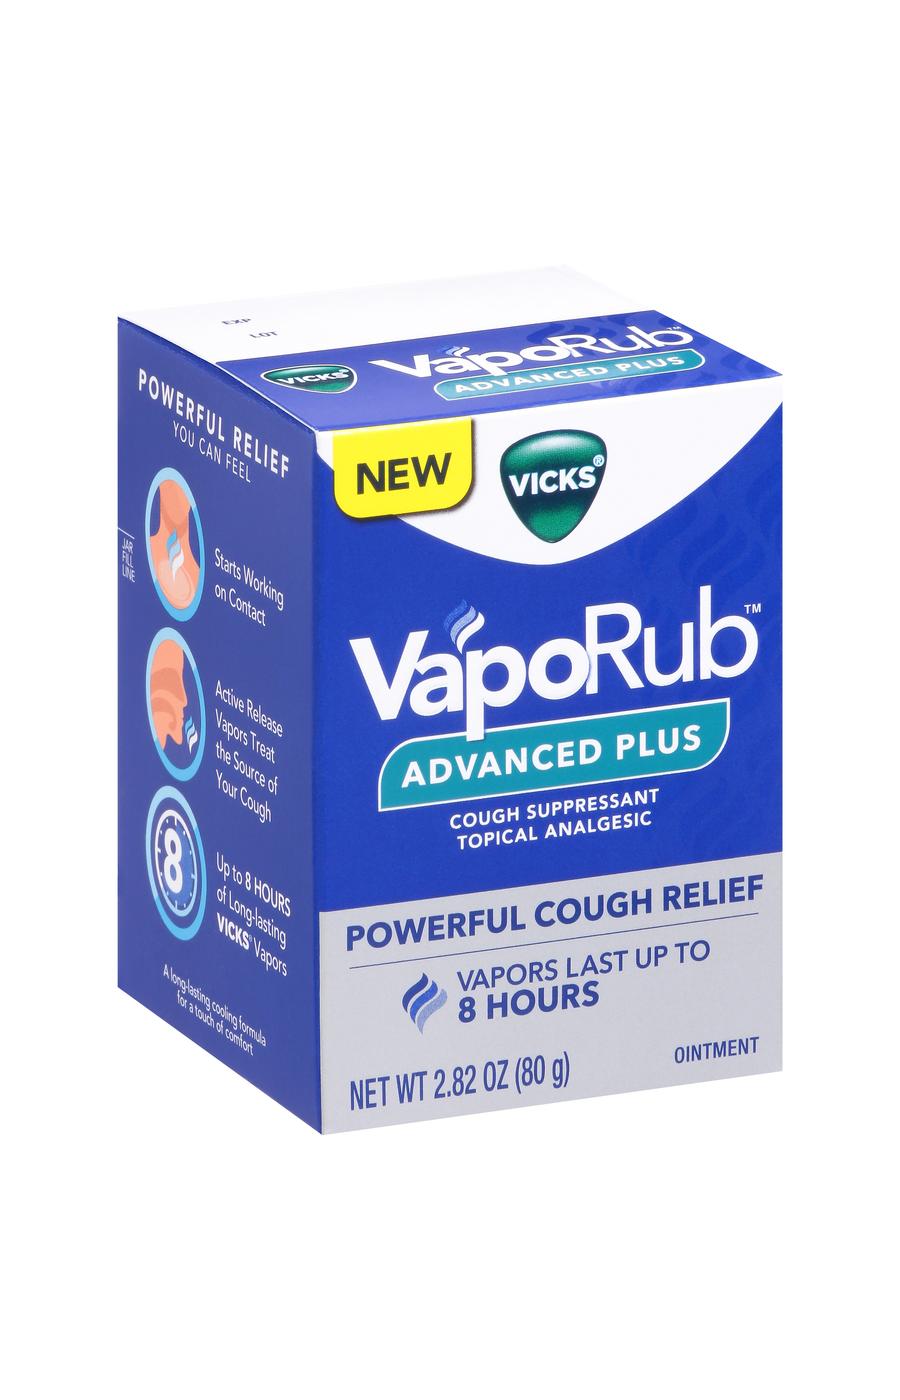 Vicks VapoRub Advanced Plus Cough Suppressant; image 2 of 2